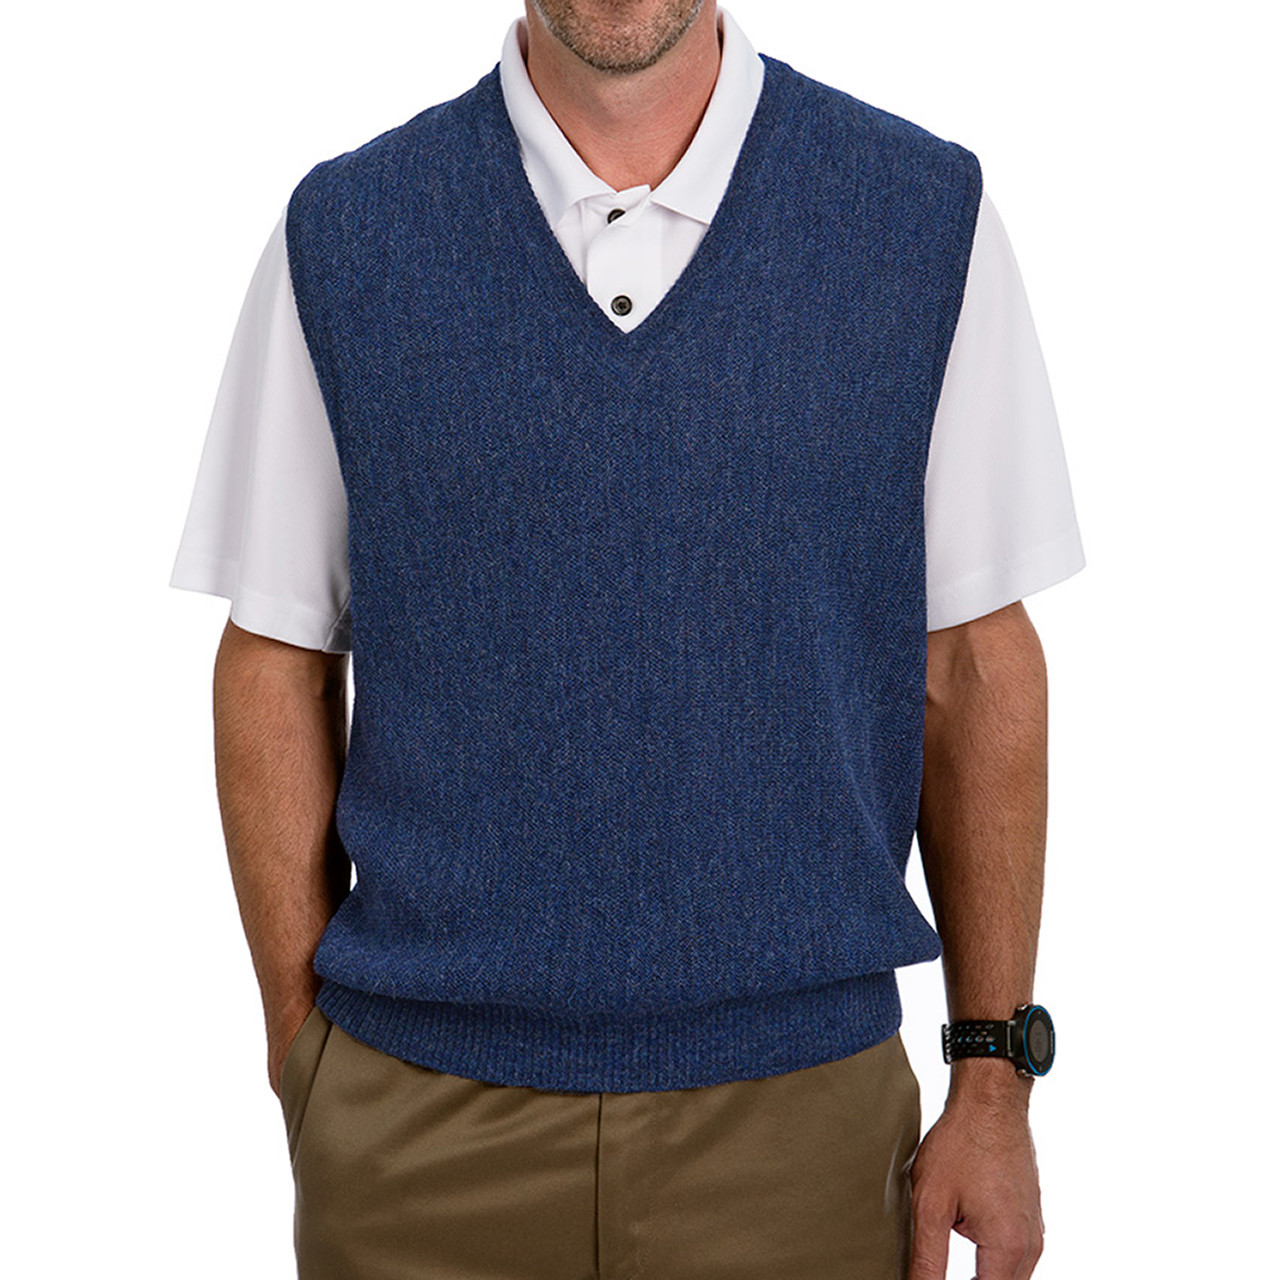 polo golf sweater vest